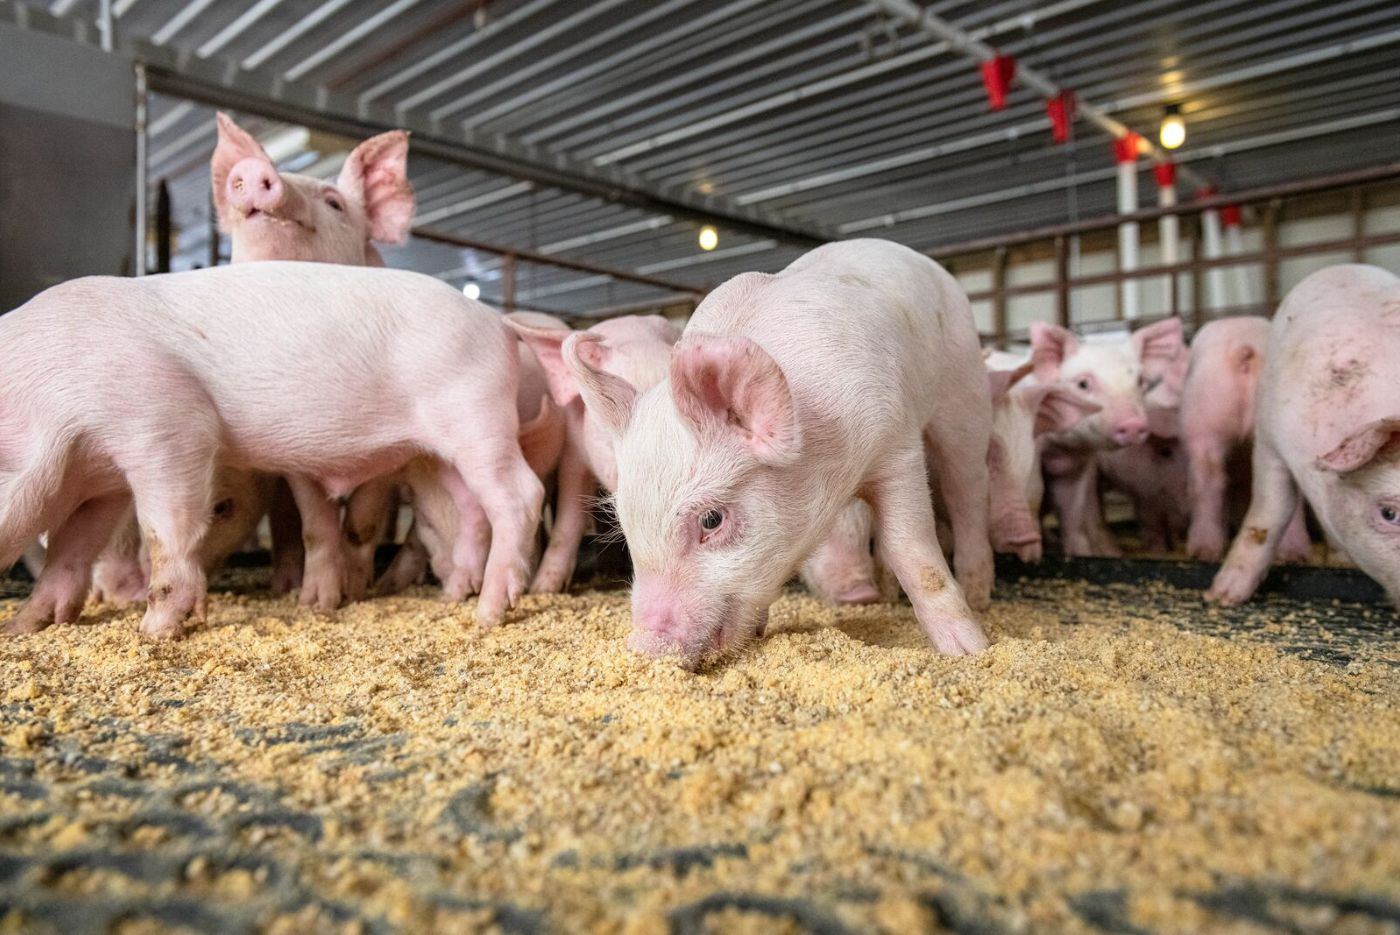 Modern biosecurity in the swine industry